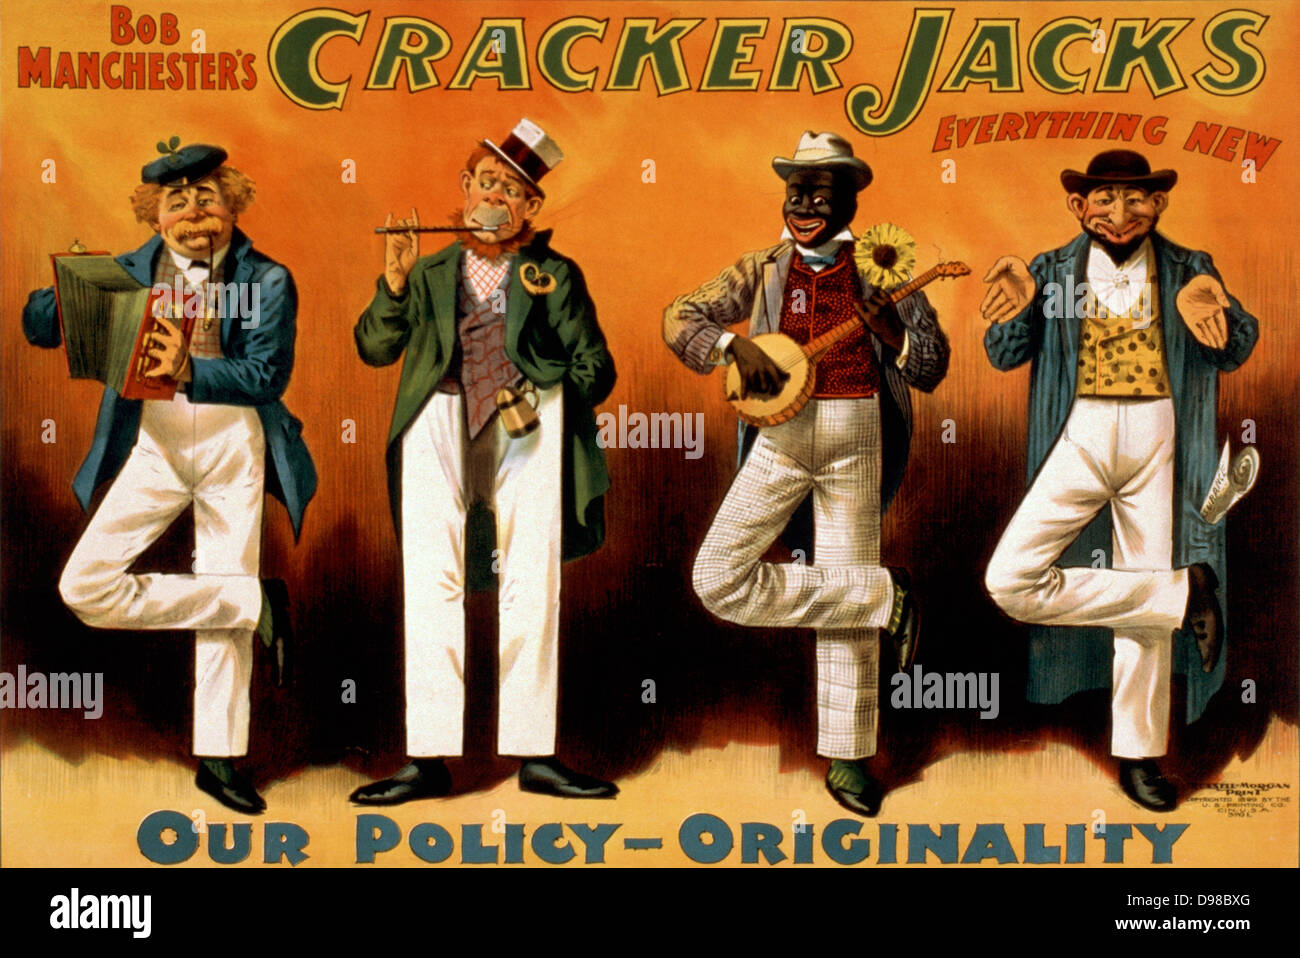 Bob Manchester's Cracker Jacks everything new c1899 Stock Photo